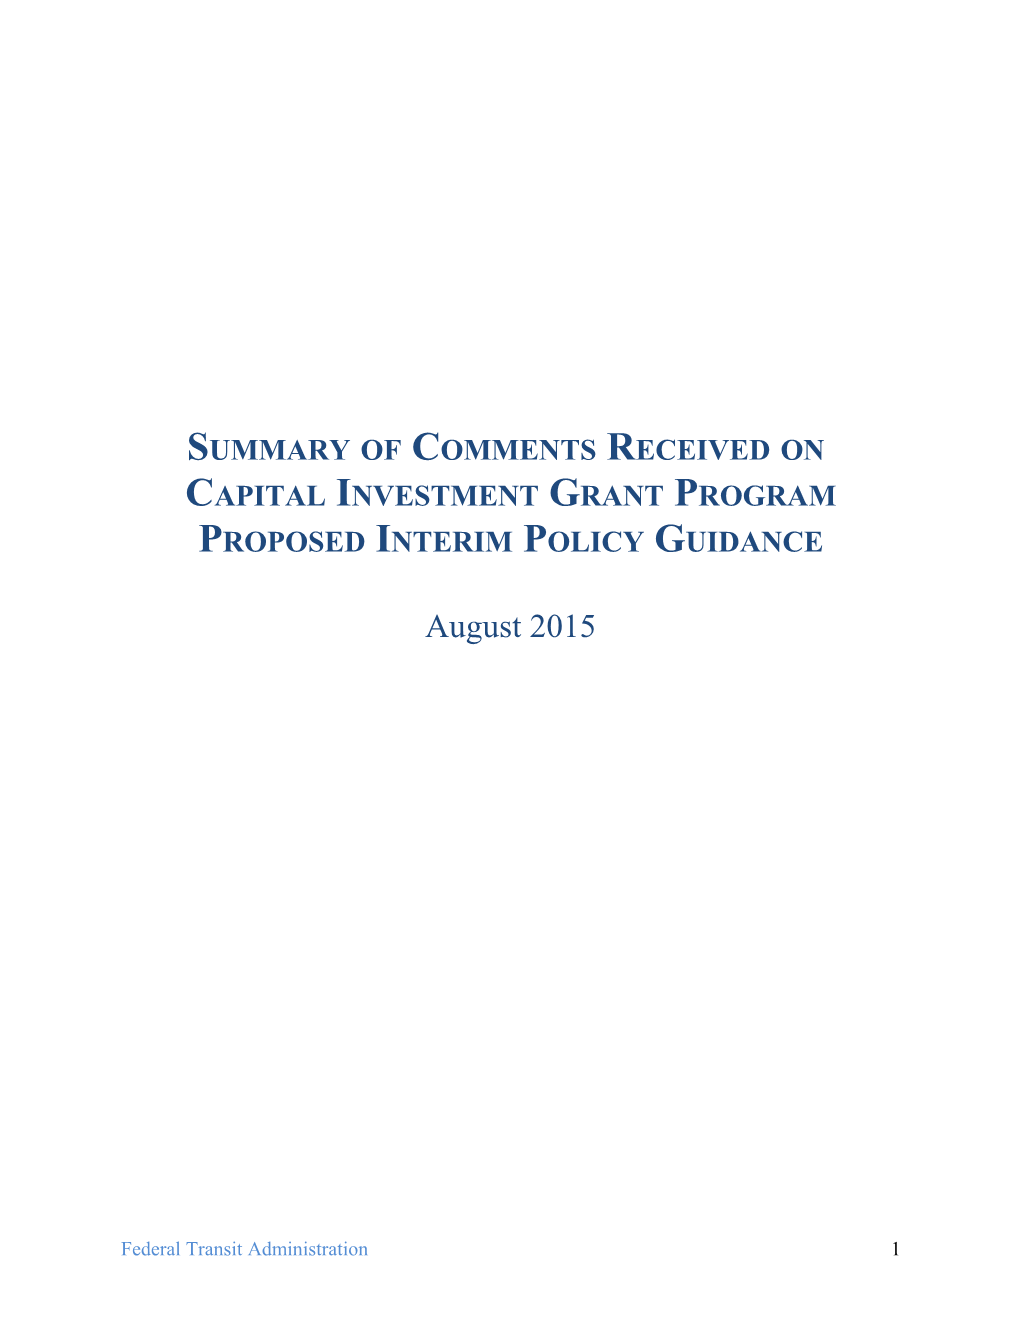 Capital Investment Grant Program